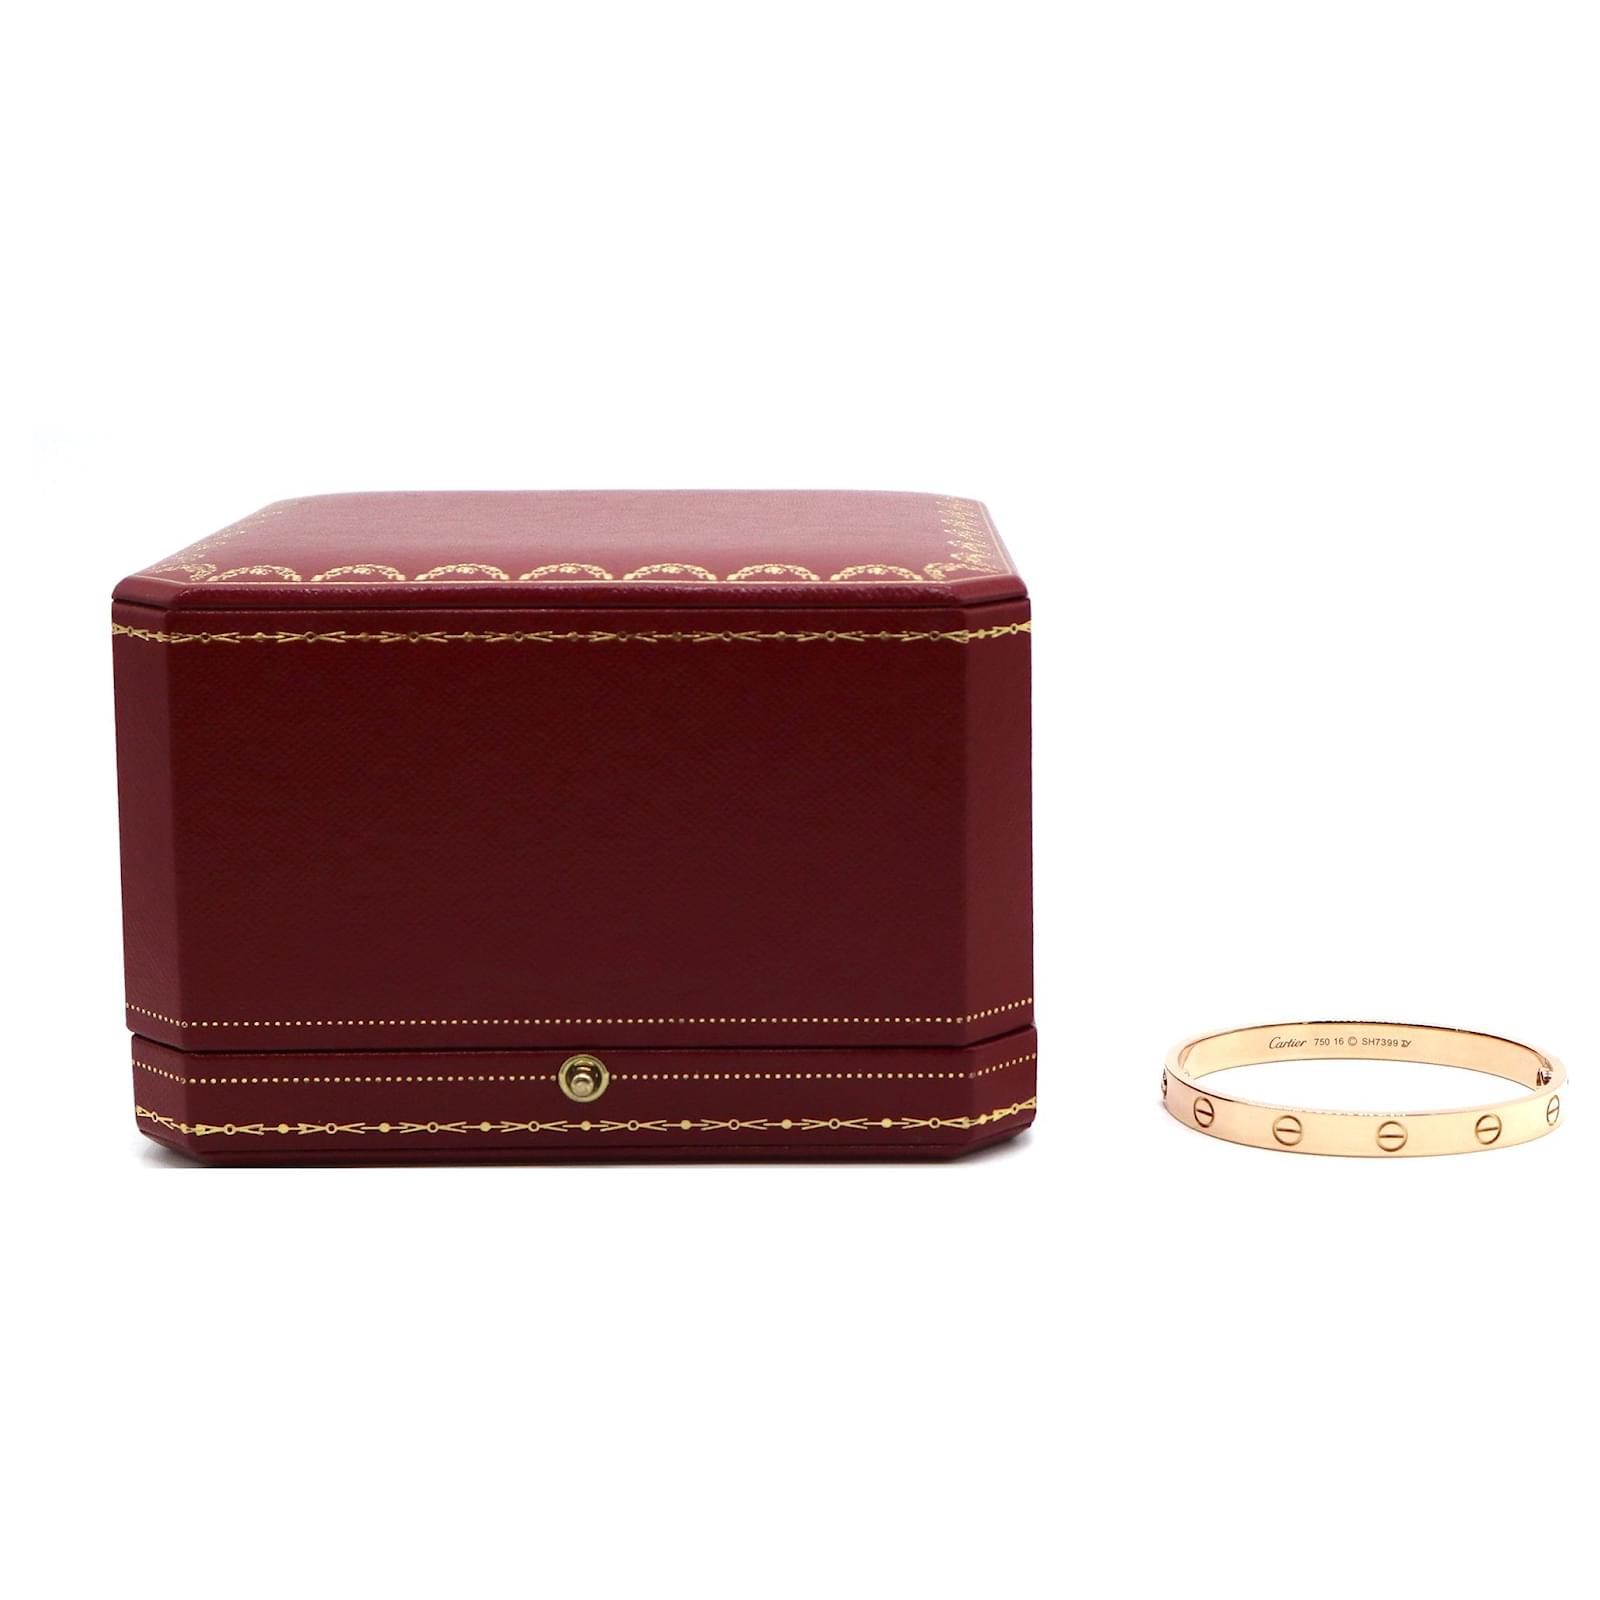 Cartier Love Bracelet Bangle 18K Pink Gold 750 Size16 90203740